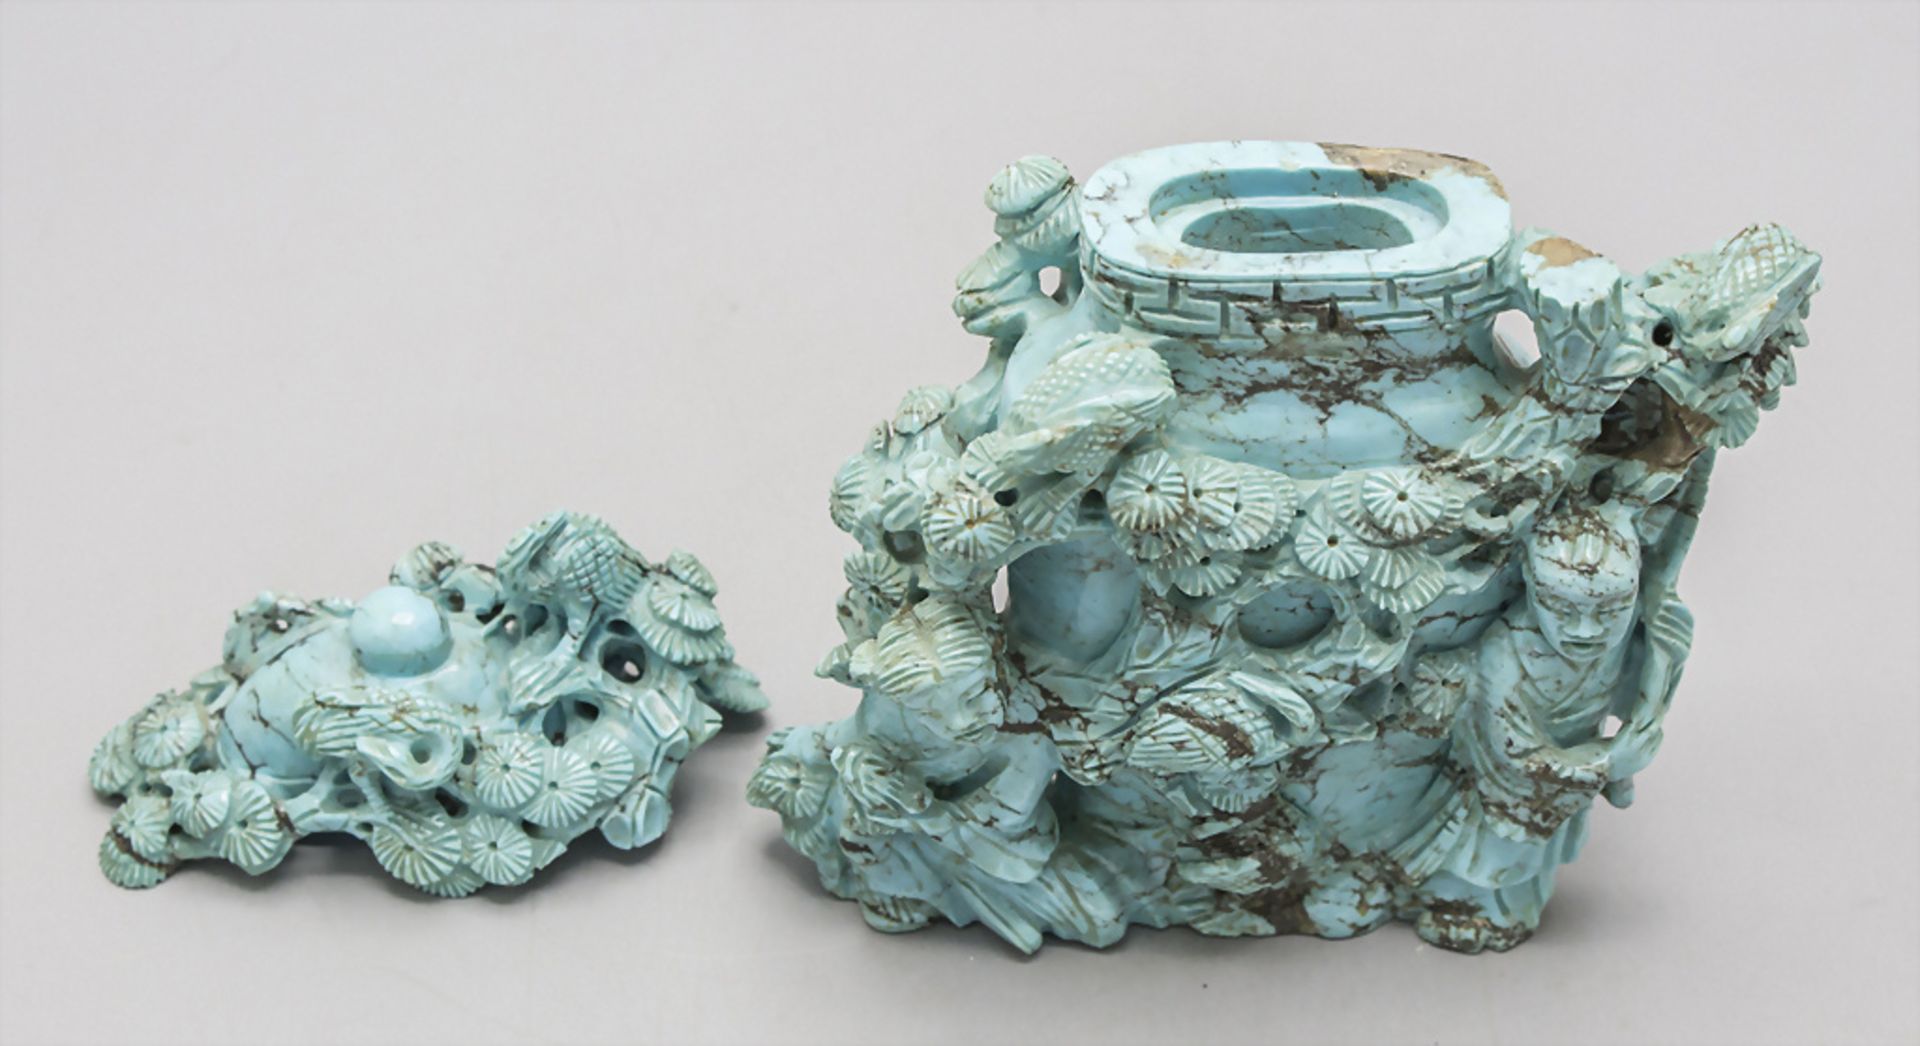 Türkis-Deckelvase / A turquoise lidded vase, China, späte Qing-Dynastie (1644-1911) - Image 5 of 7